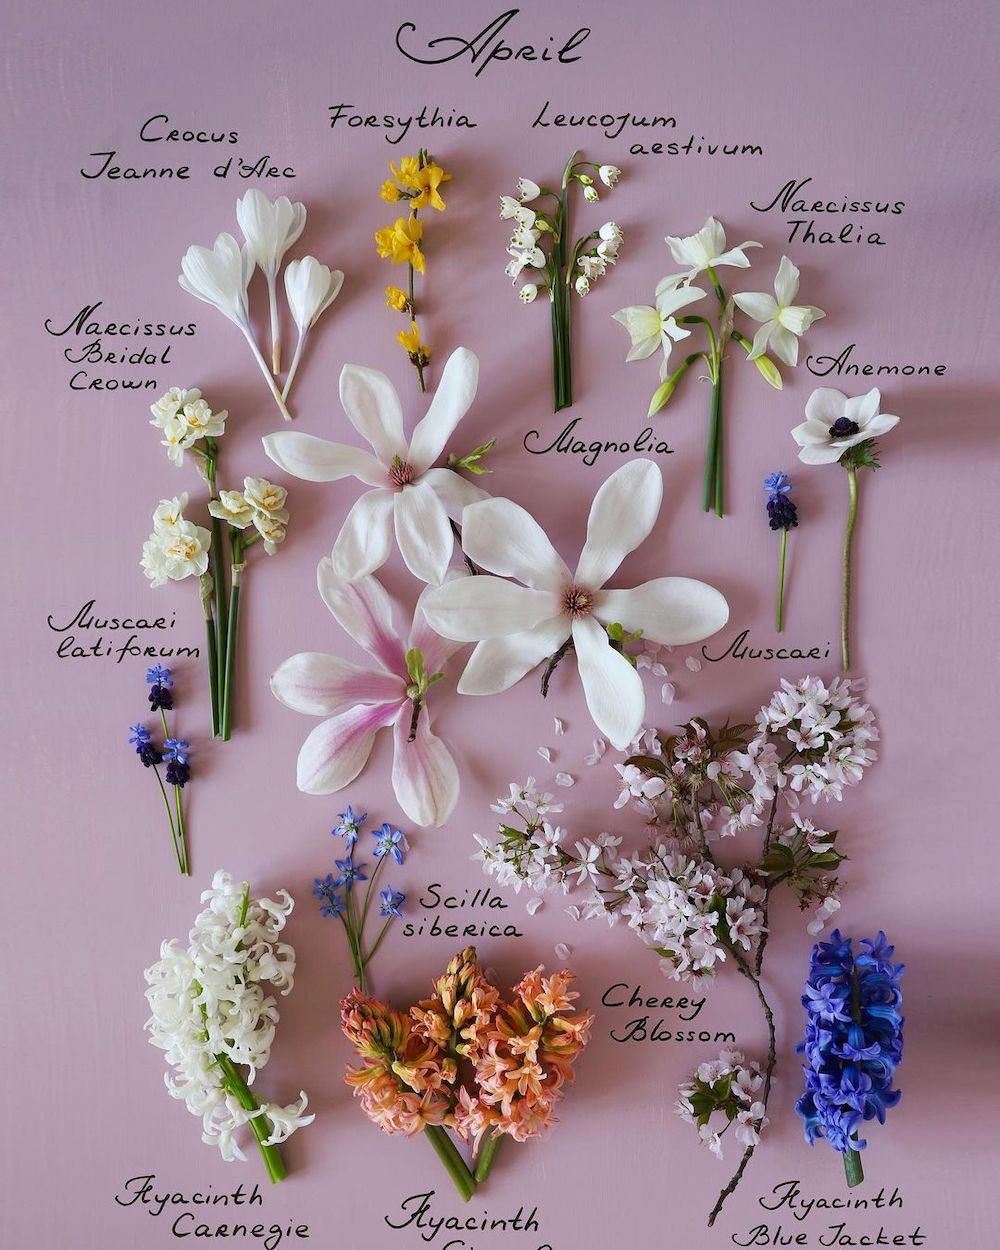 London Blooms Turns Her Garden Into a Botanical Calendar003